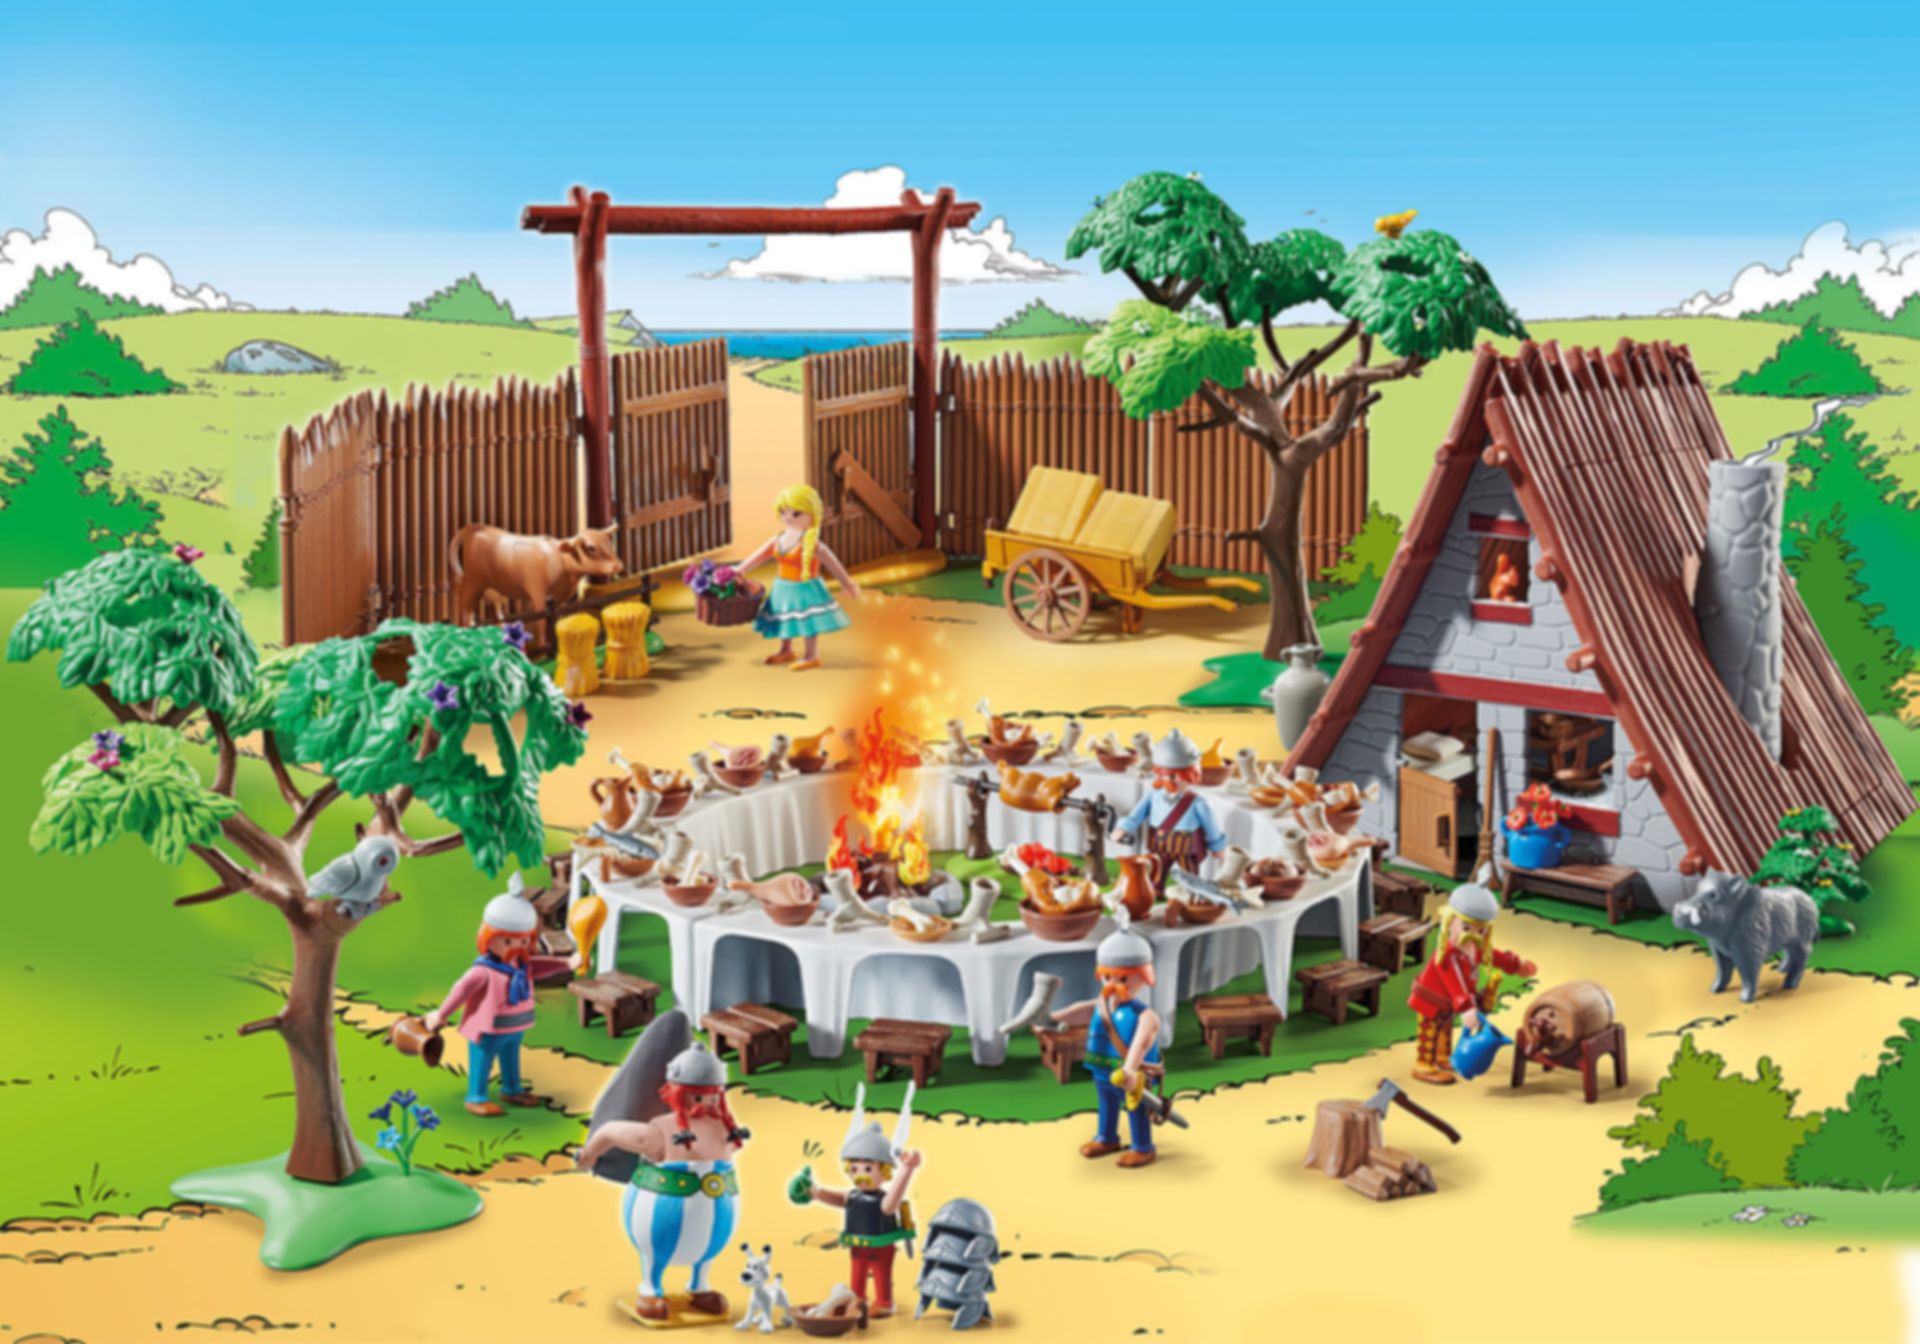 Playmobil® Asterix Asterix : The village banquet